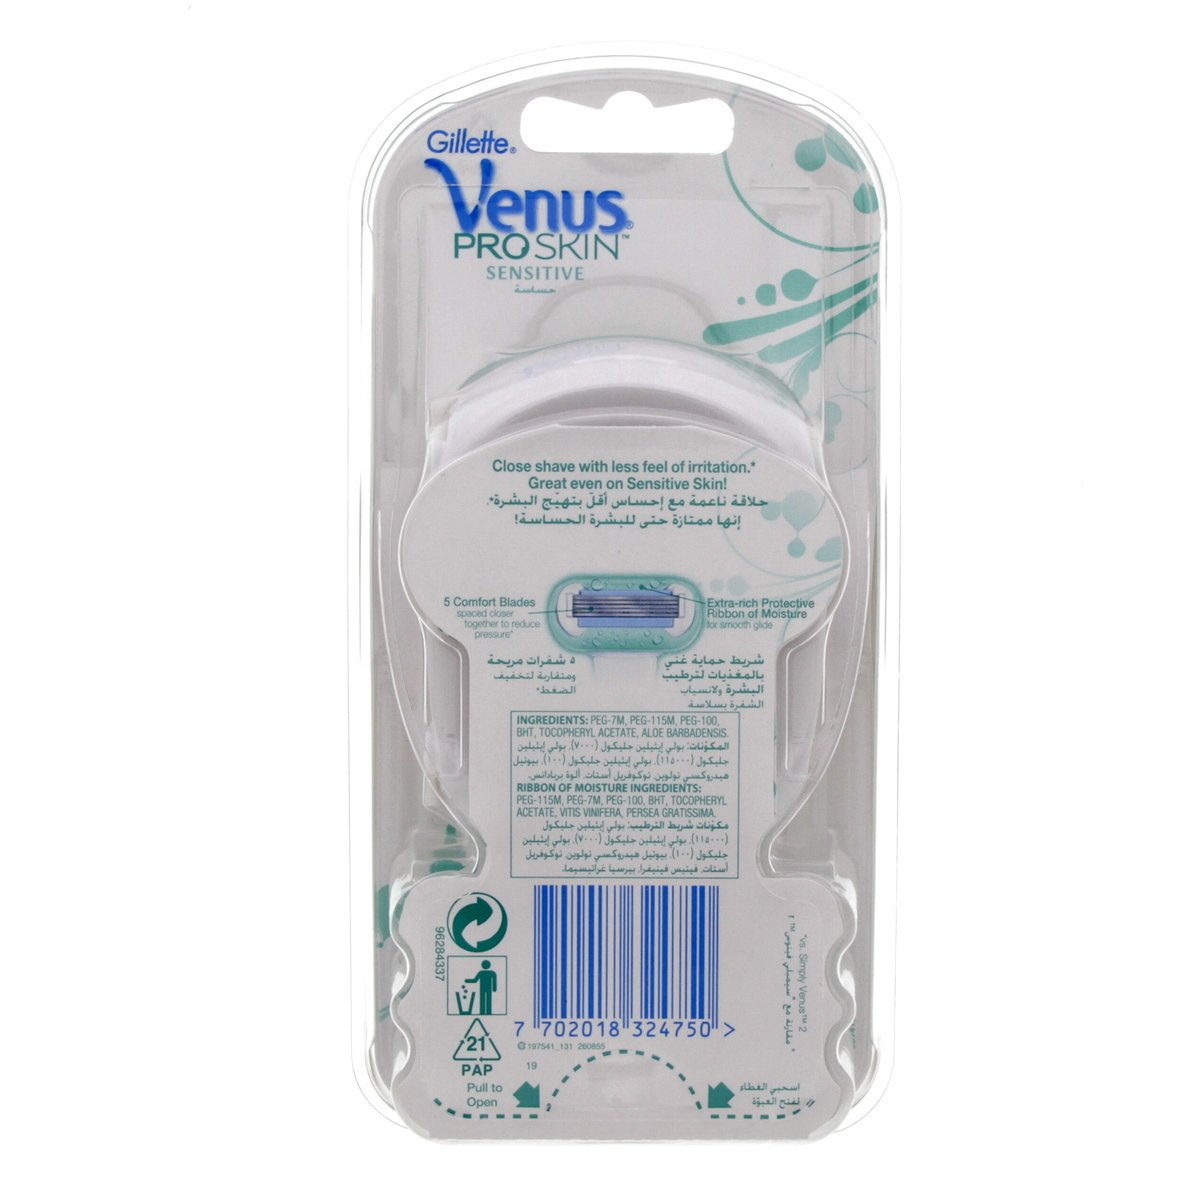 Gillette Venus Pro Skin Sensitive